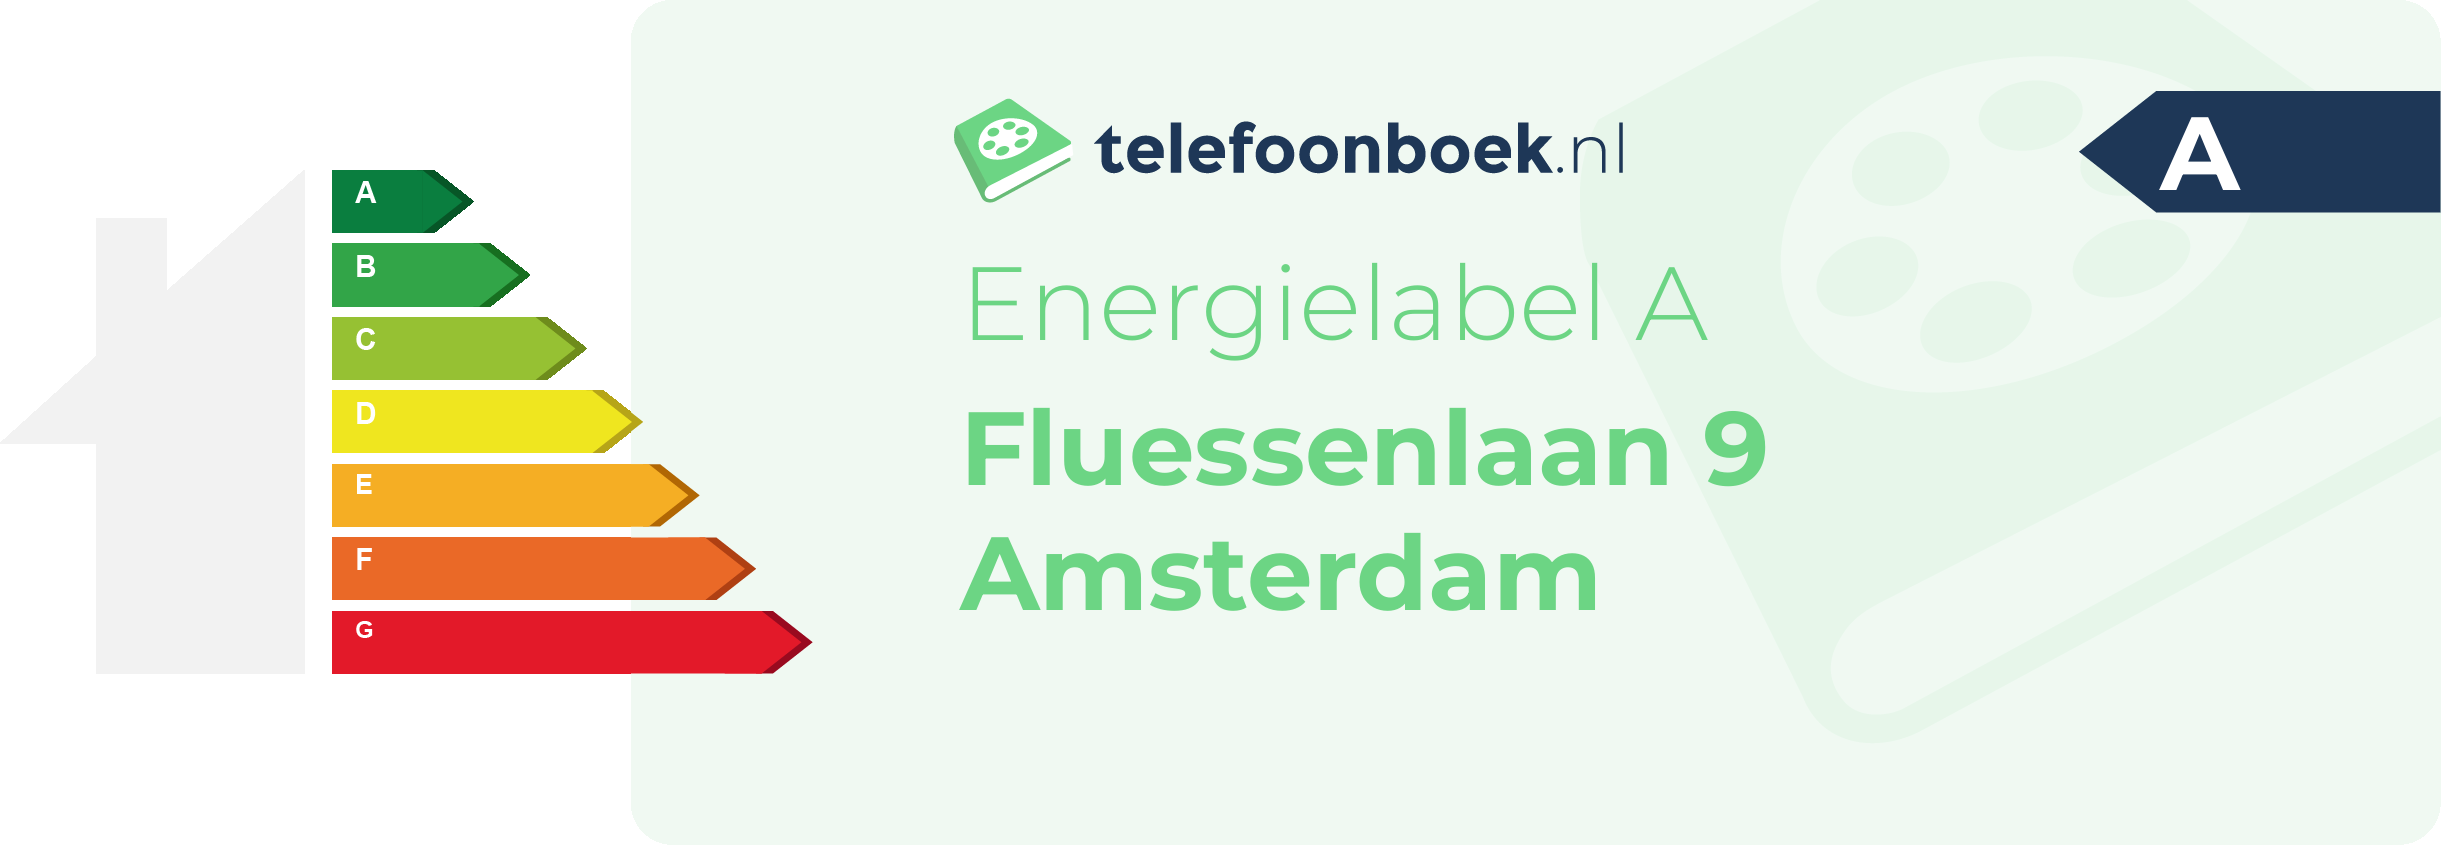 Energielabel Fluessenlaan 9 Amsterdam